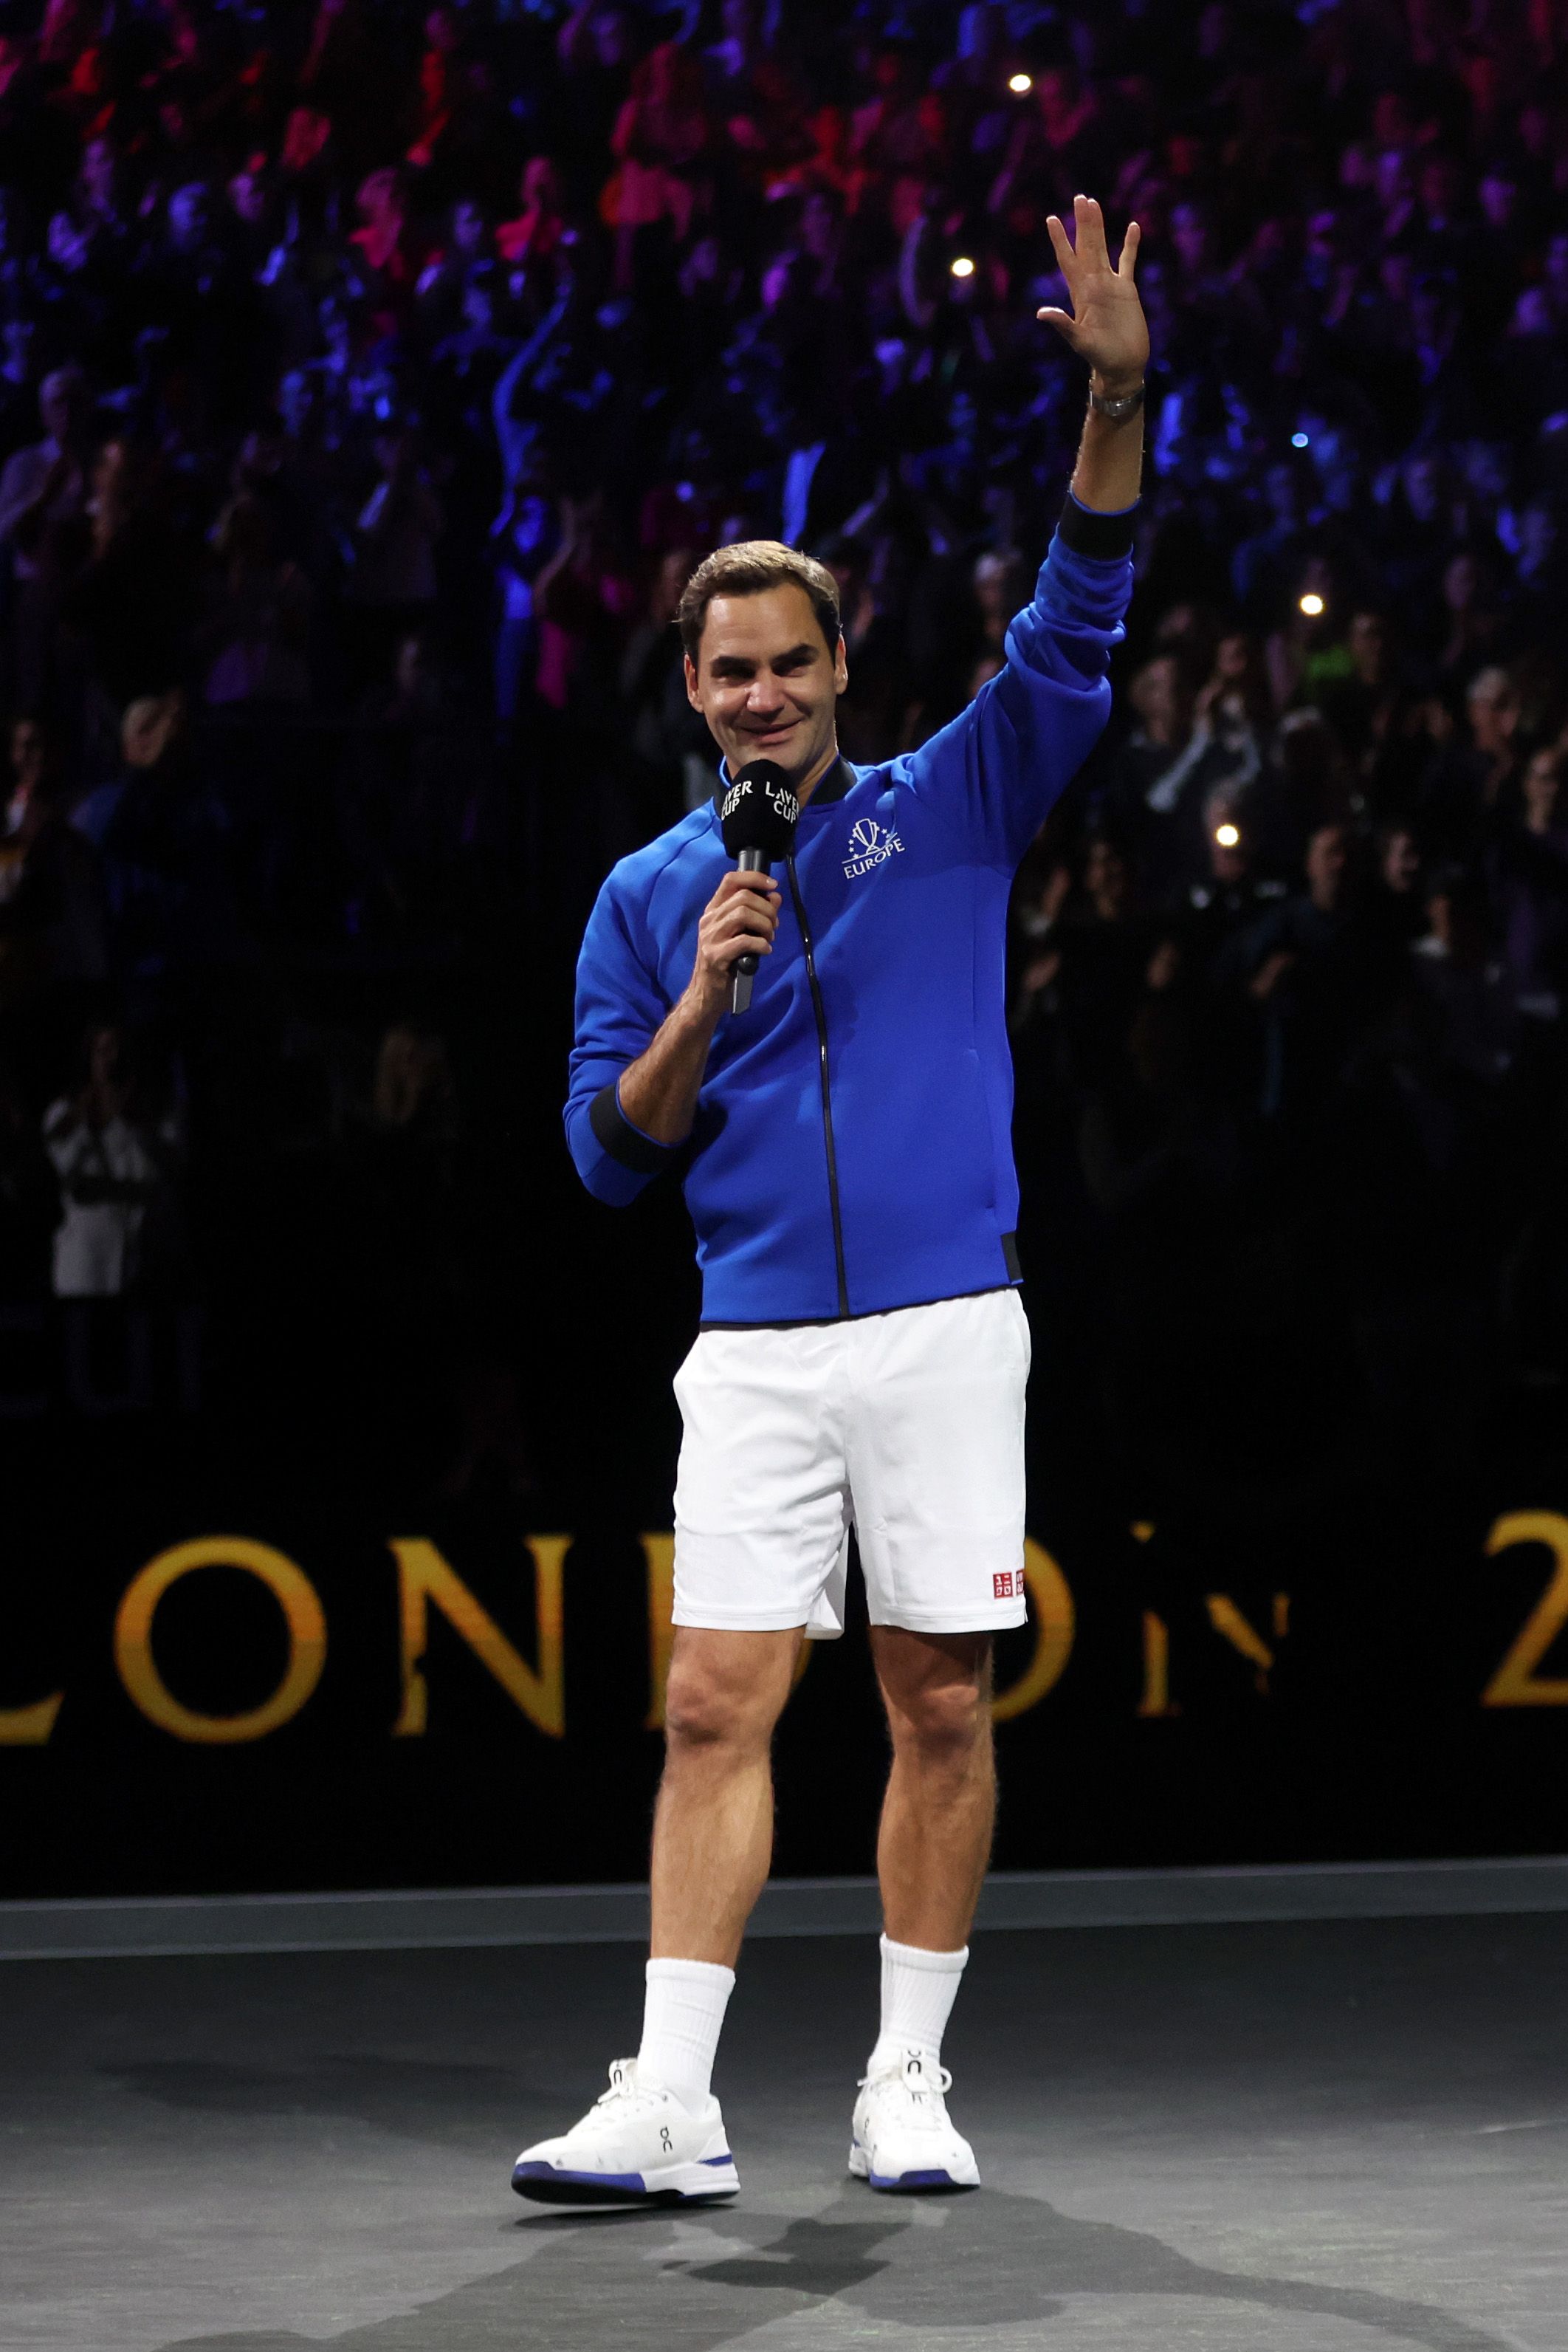 Roger Federer says good bye